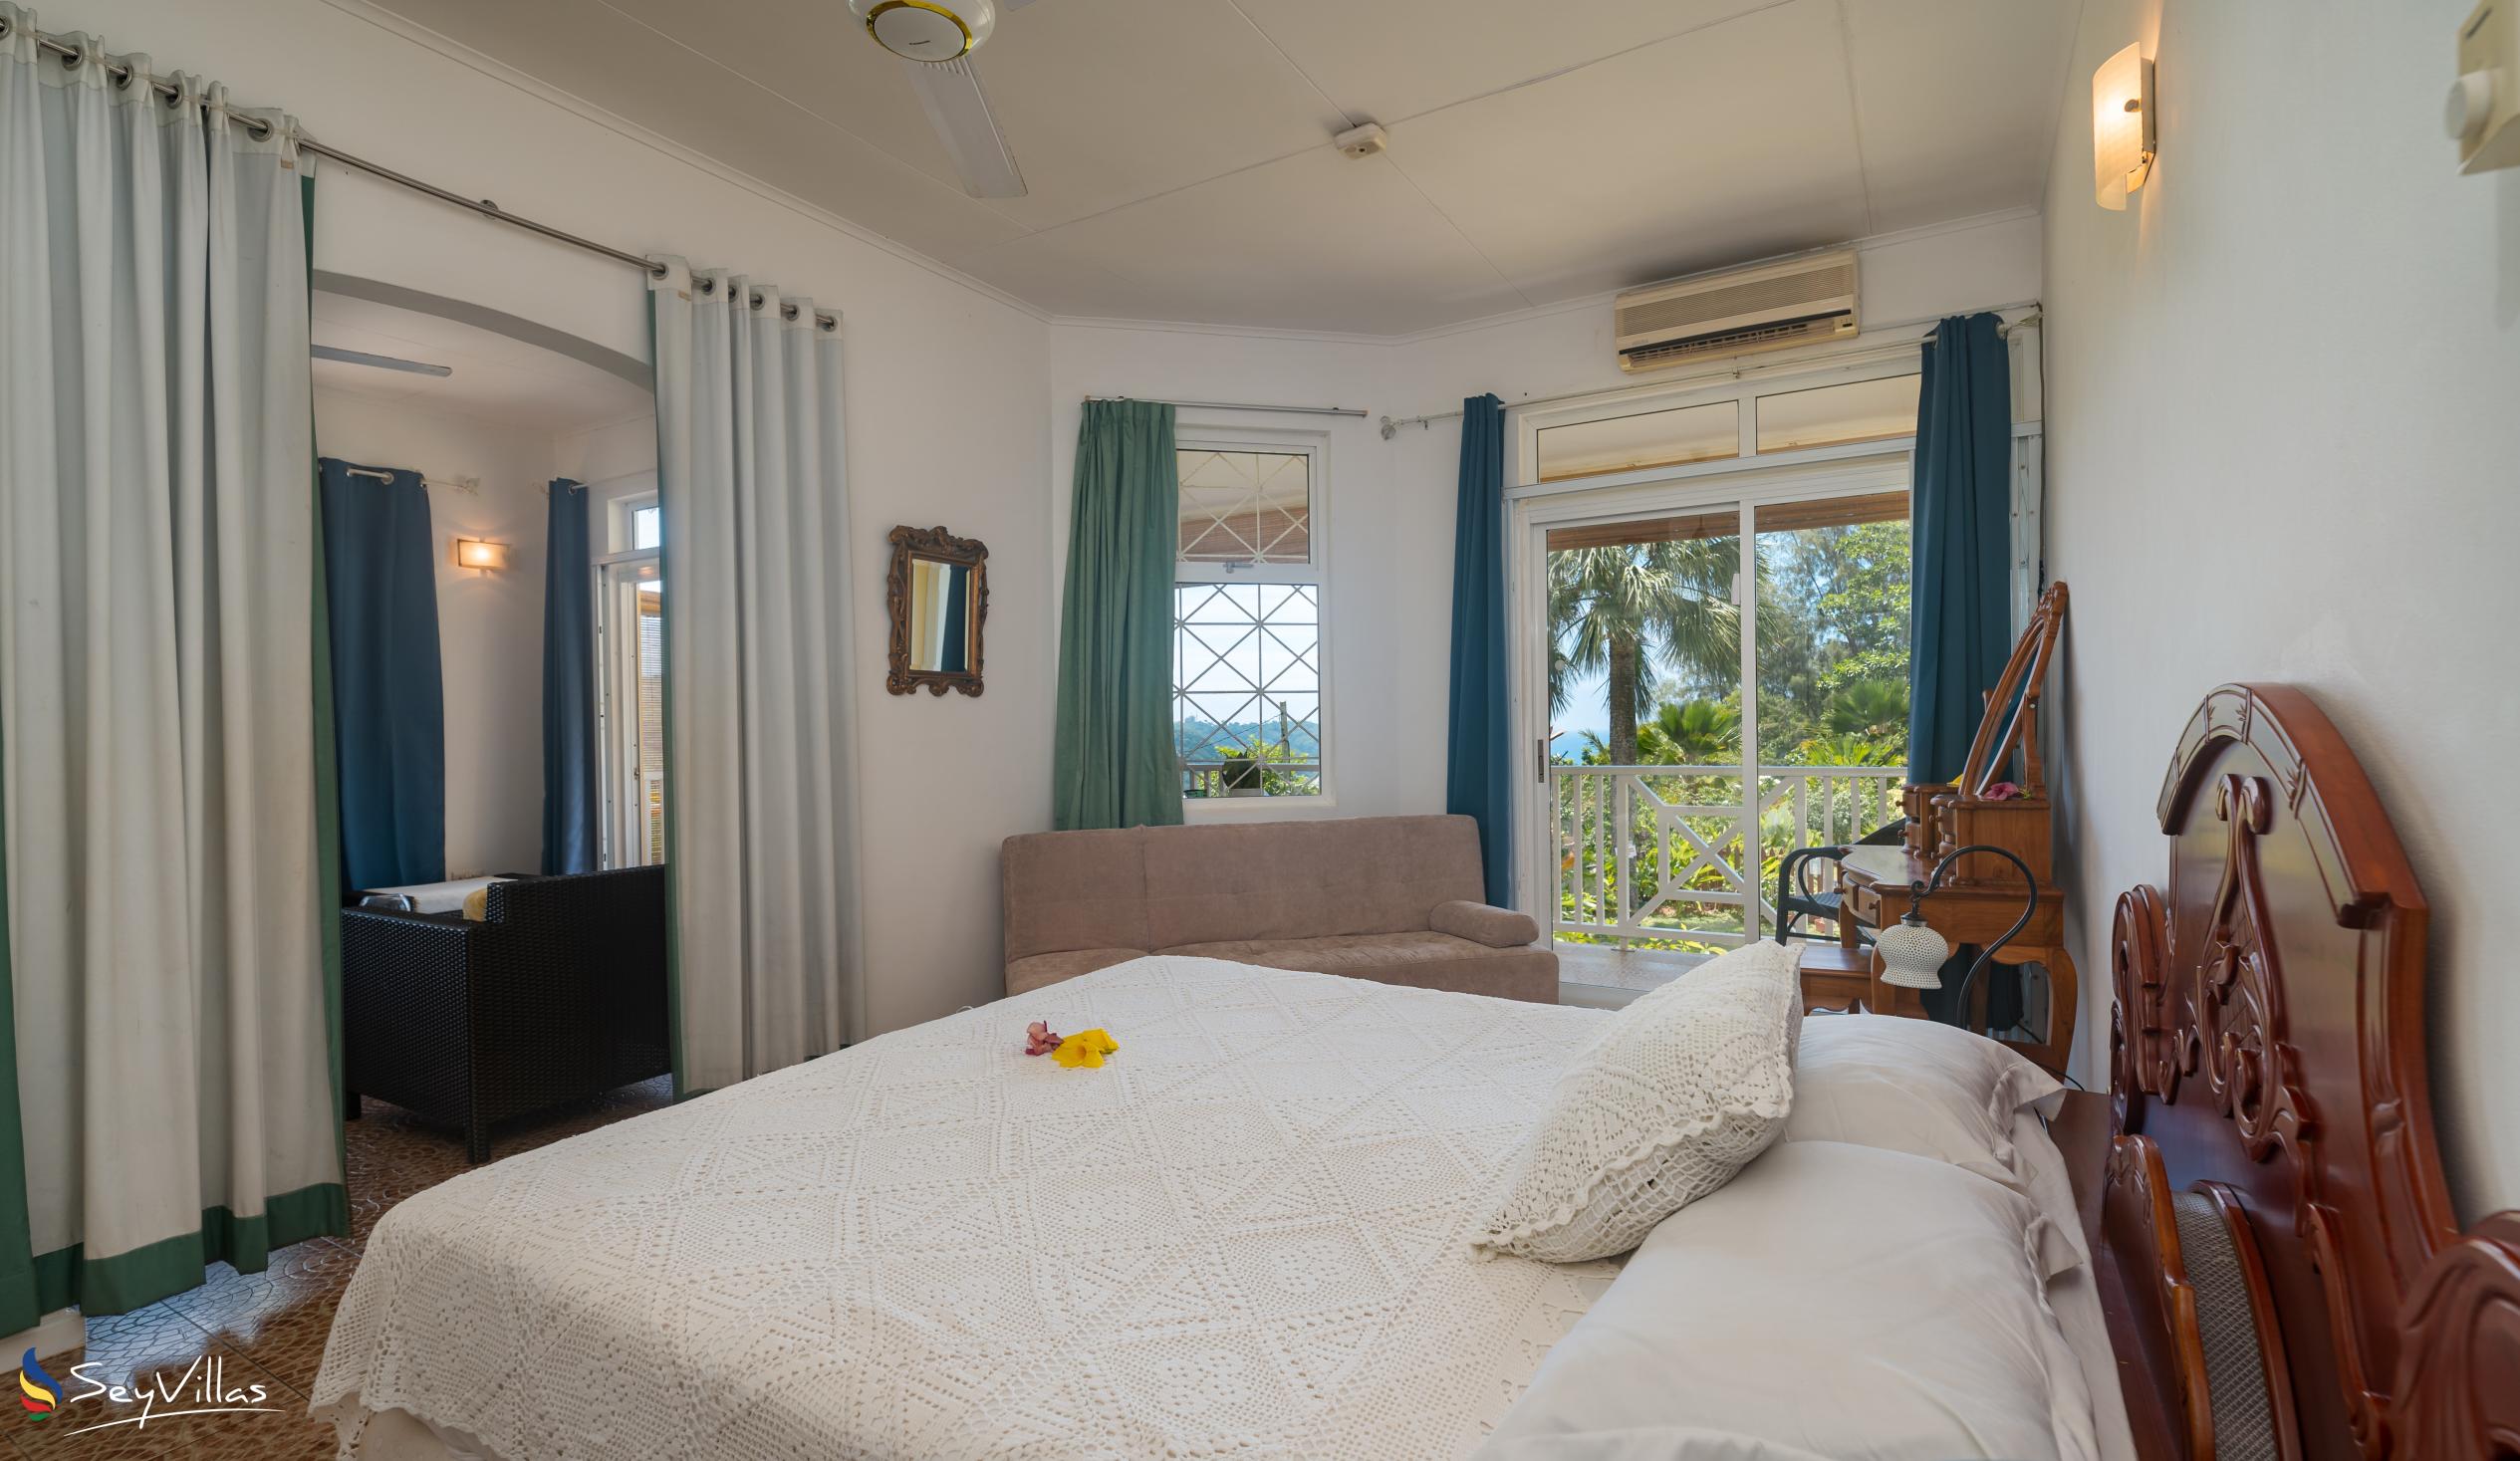 Foto 45: Residence Monte Cristo - Appartement 1 chambre - Mahé (Seychelles)